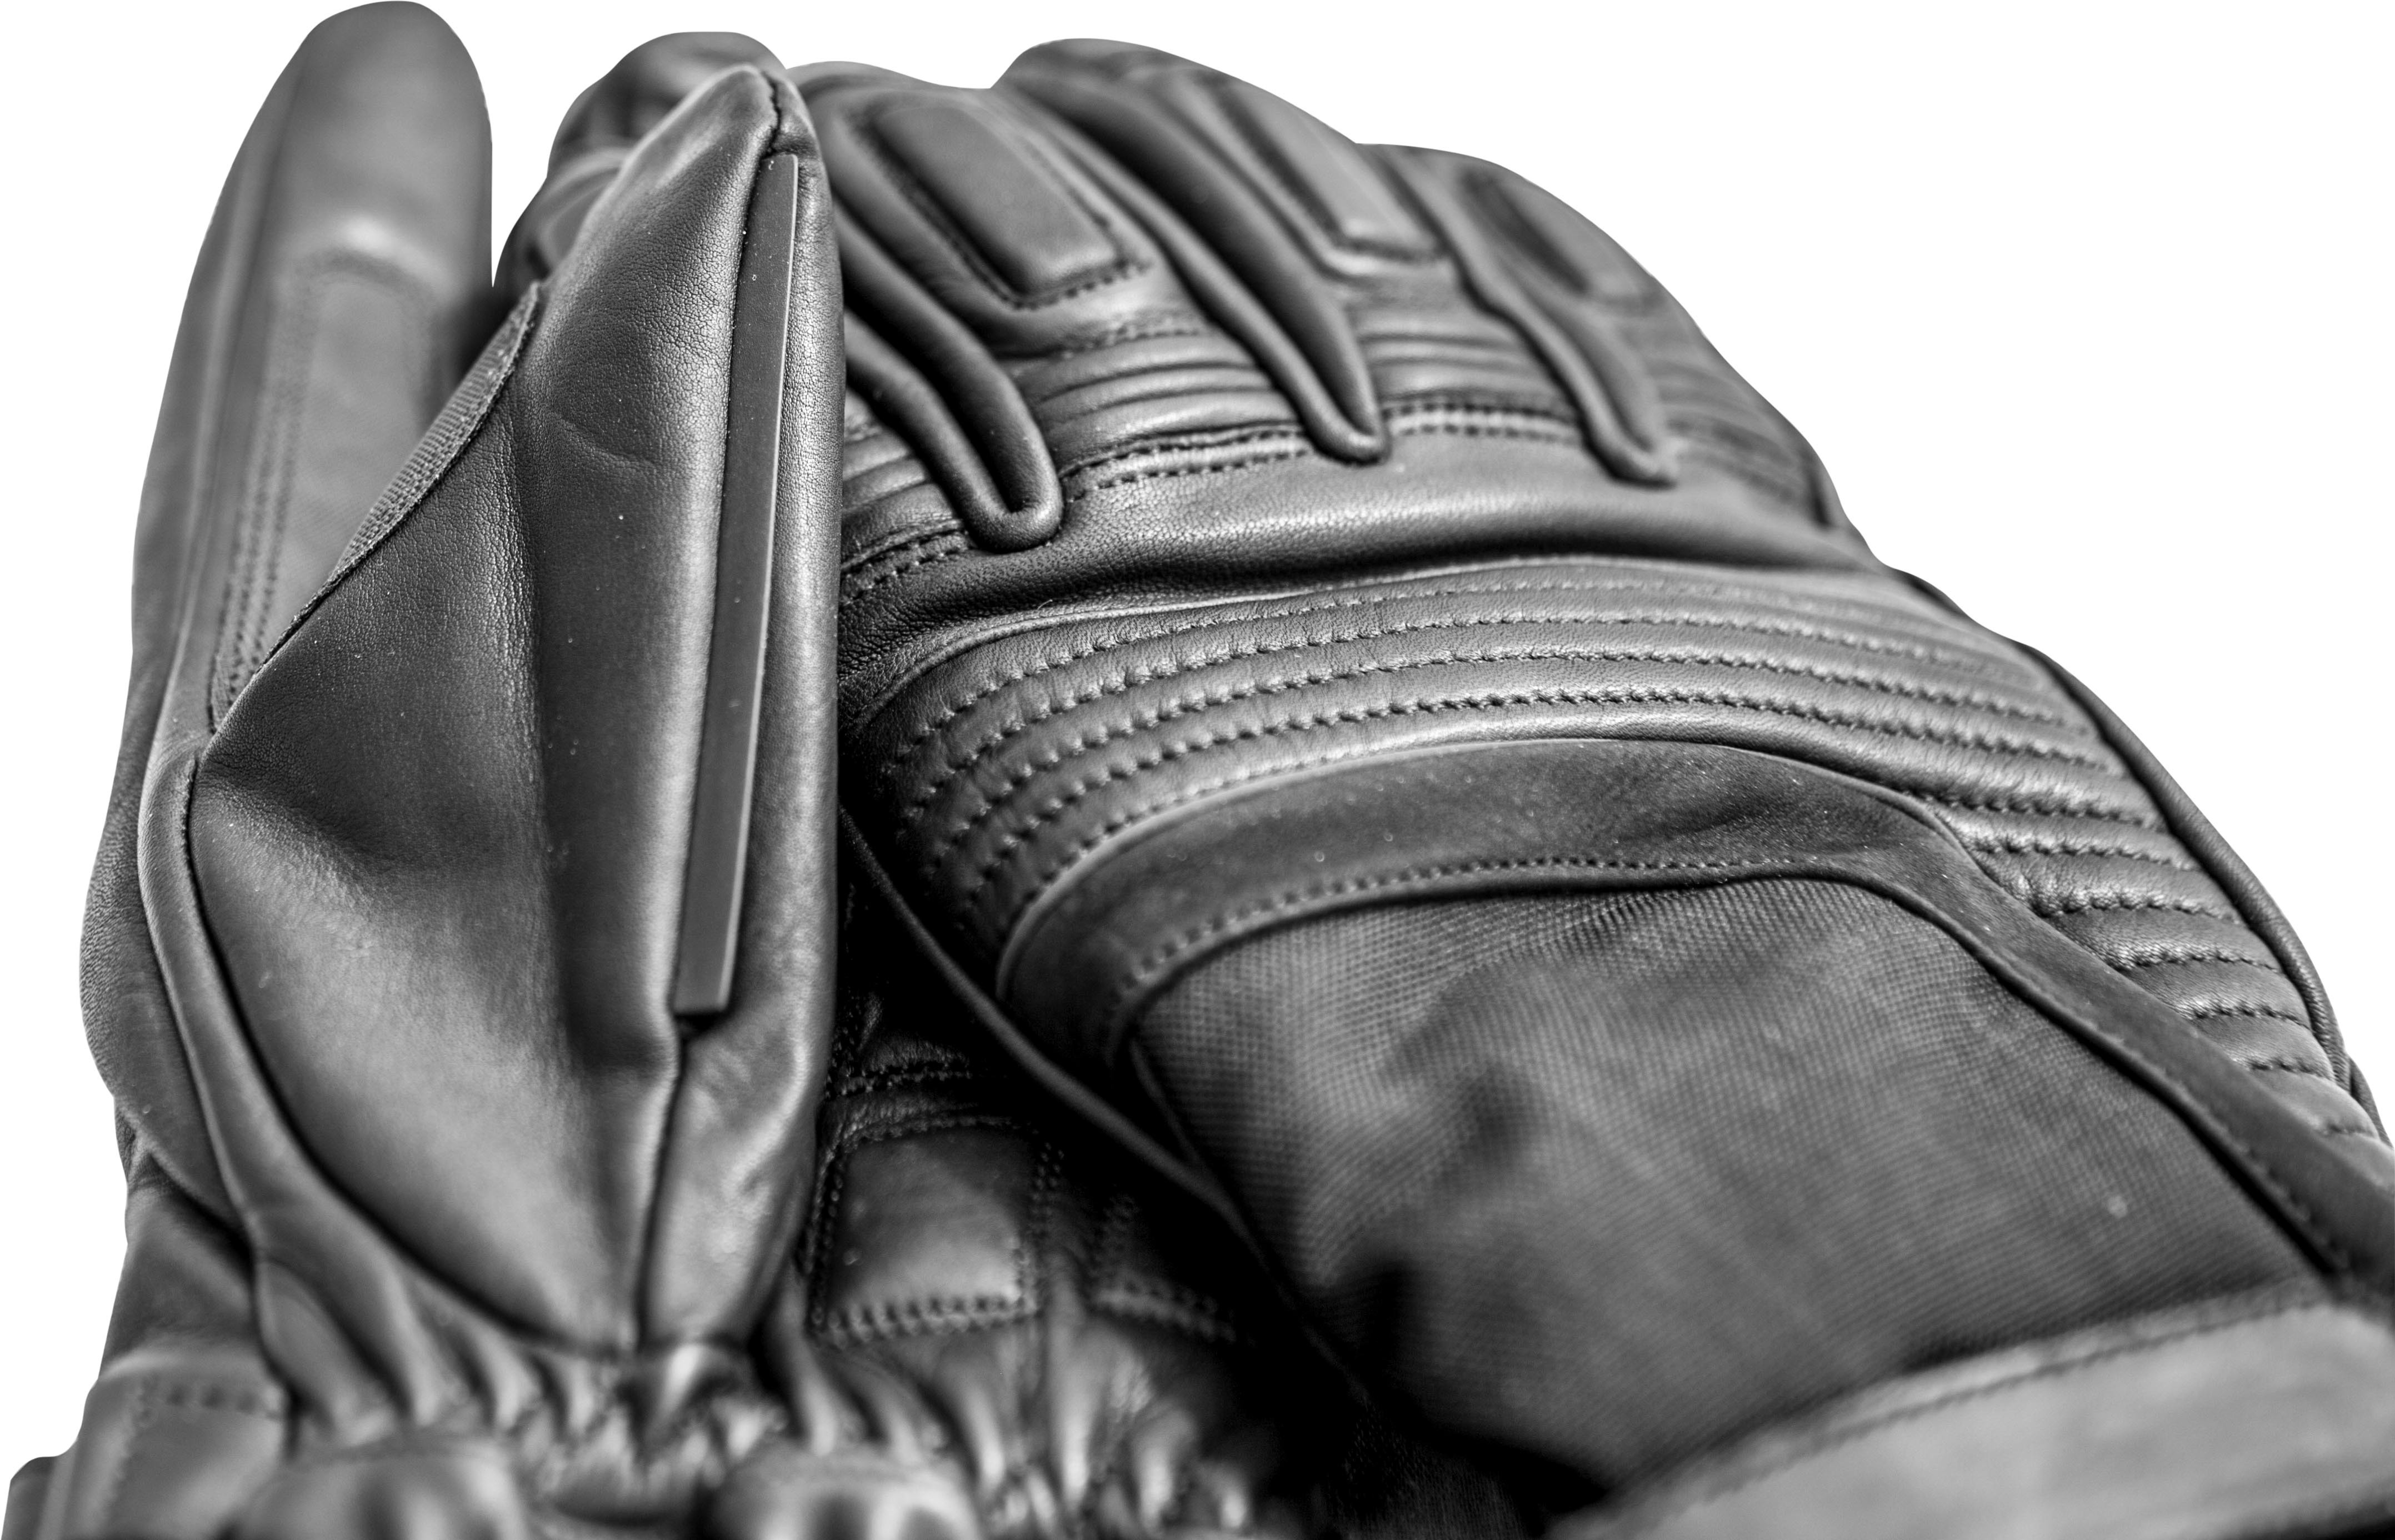 12V Heated Gauntlet Gloves Black Medium - Click Image to Close